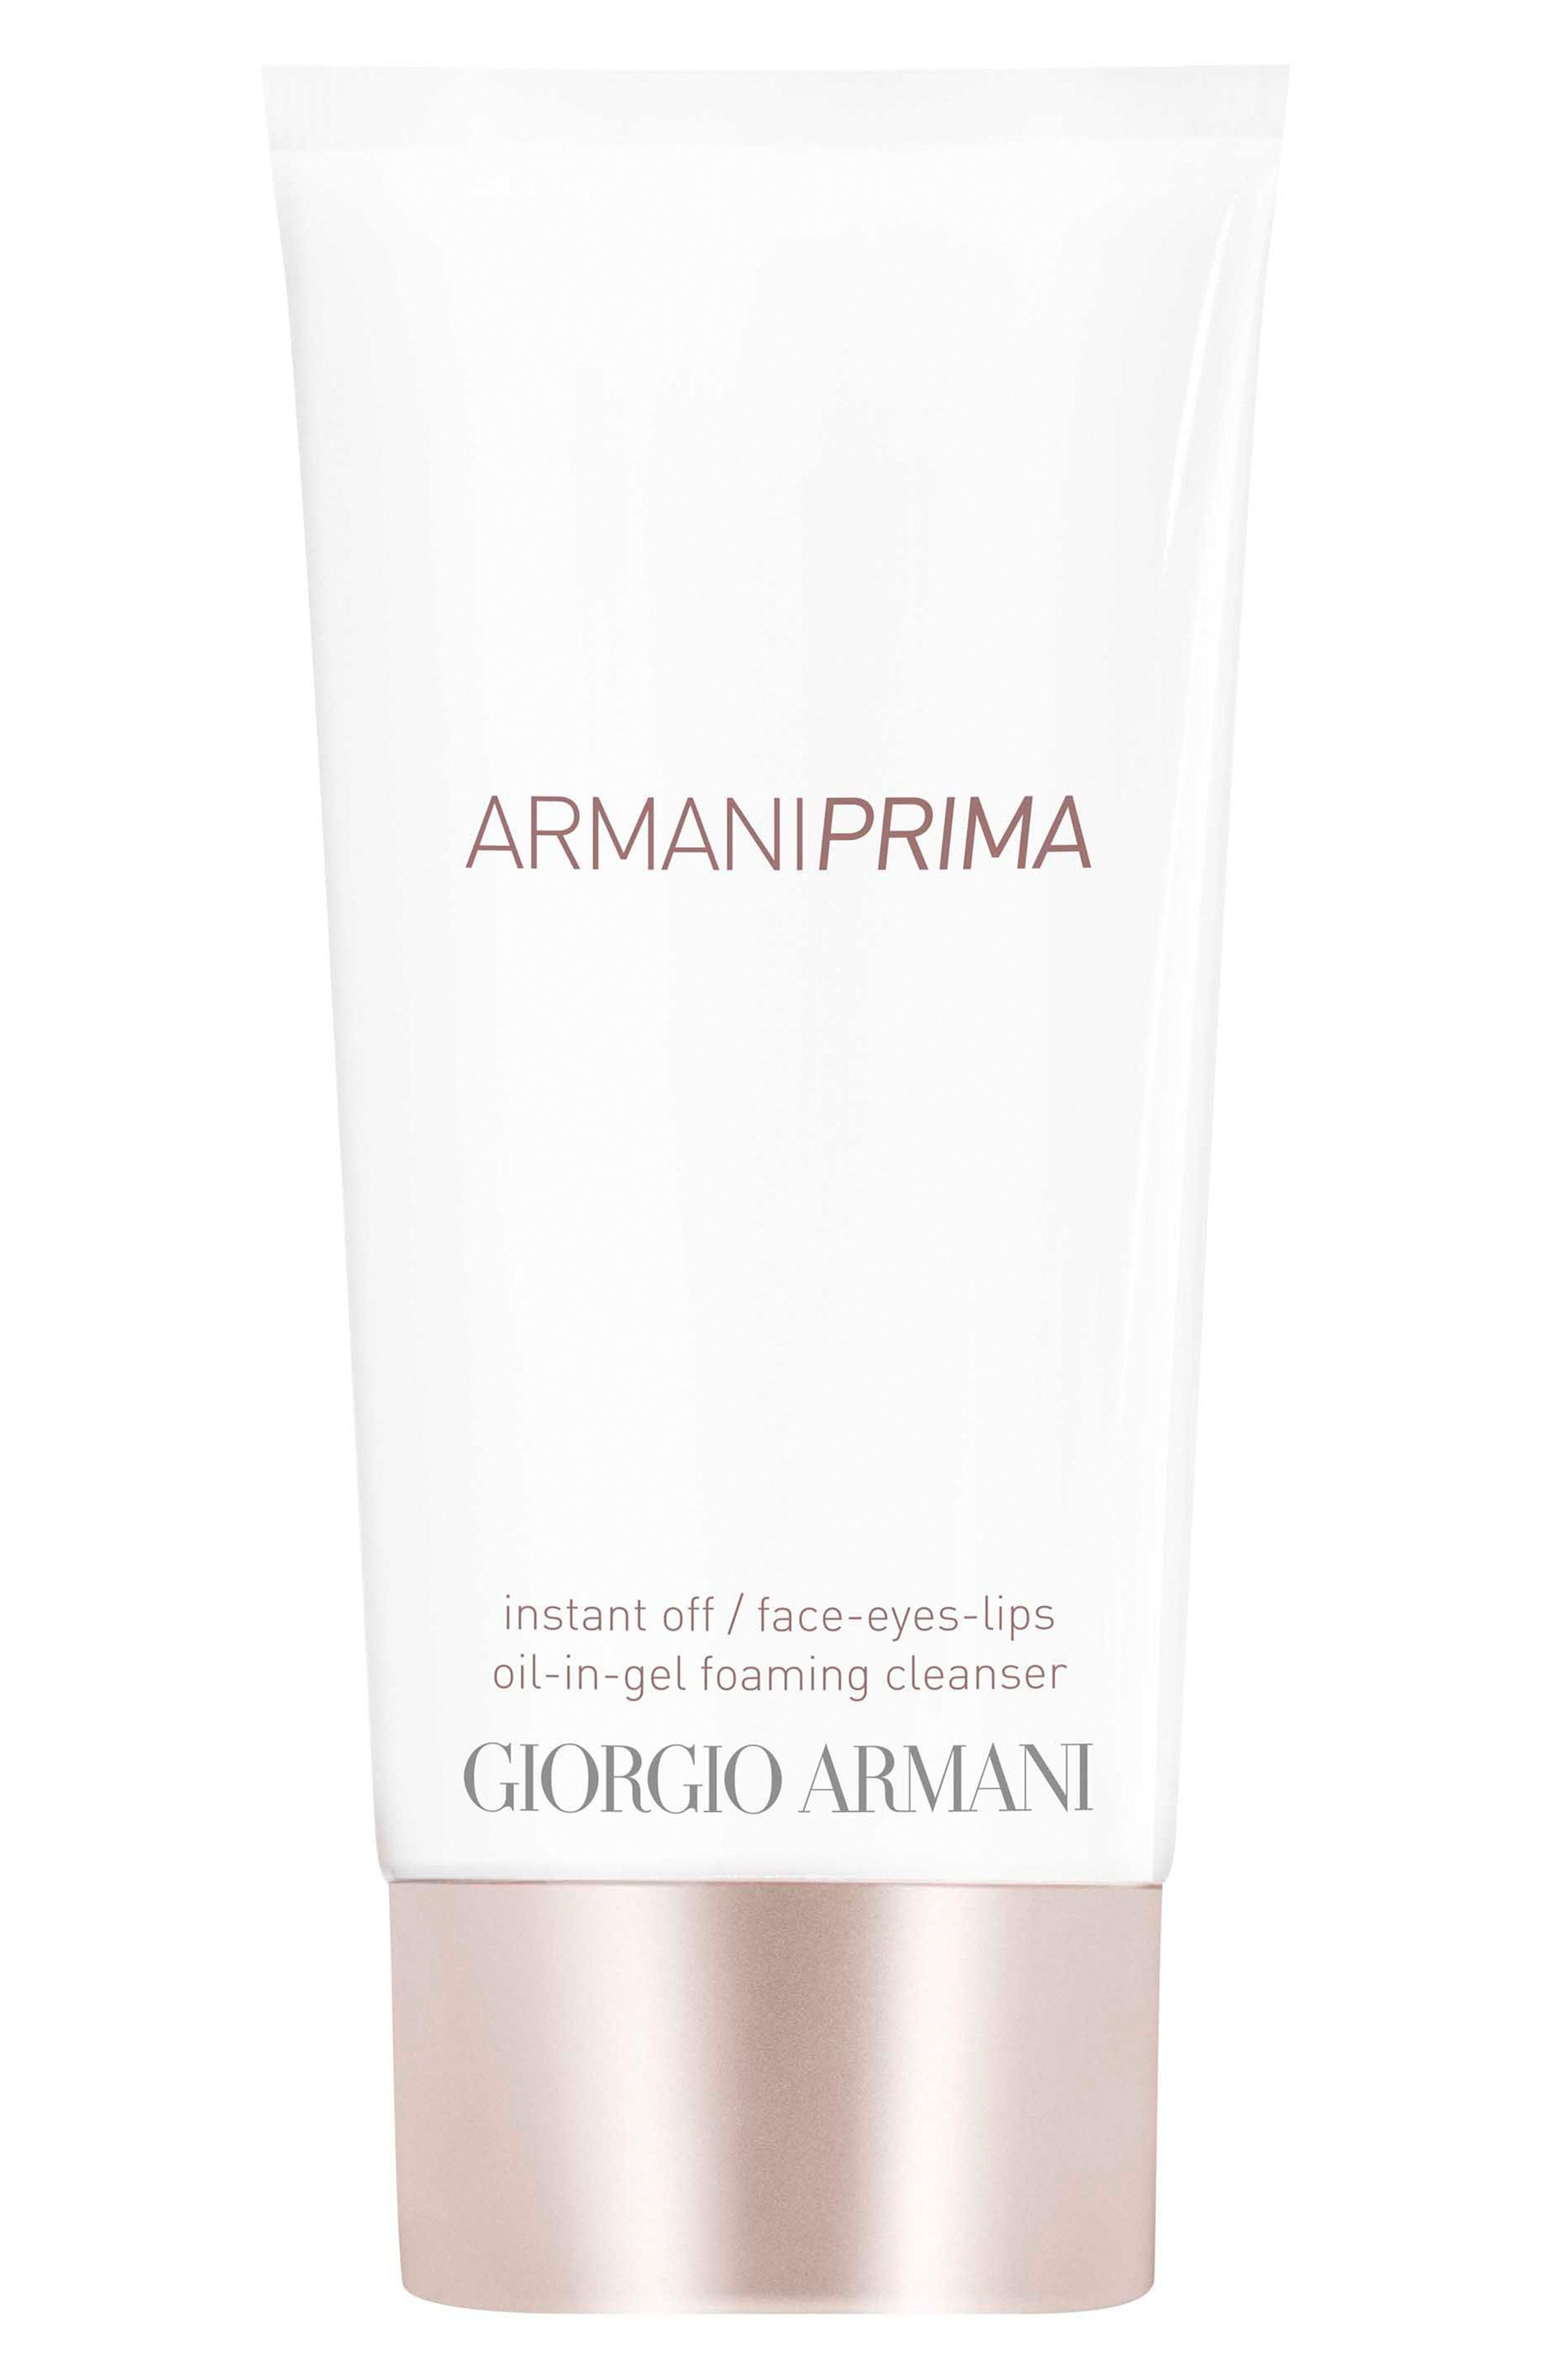 Prima Instant Off Face, Eyes & Lips Oil-in-Gel Foaming Cleanser